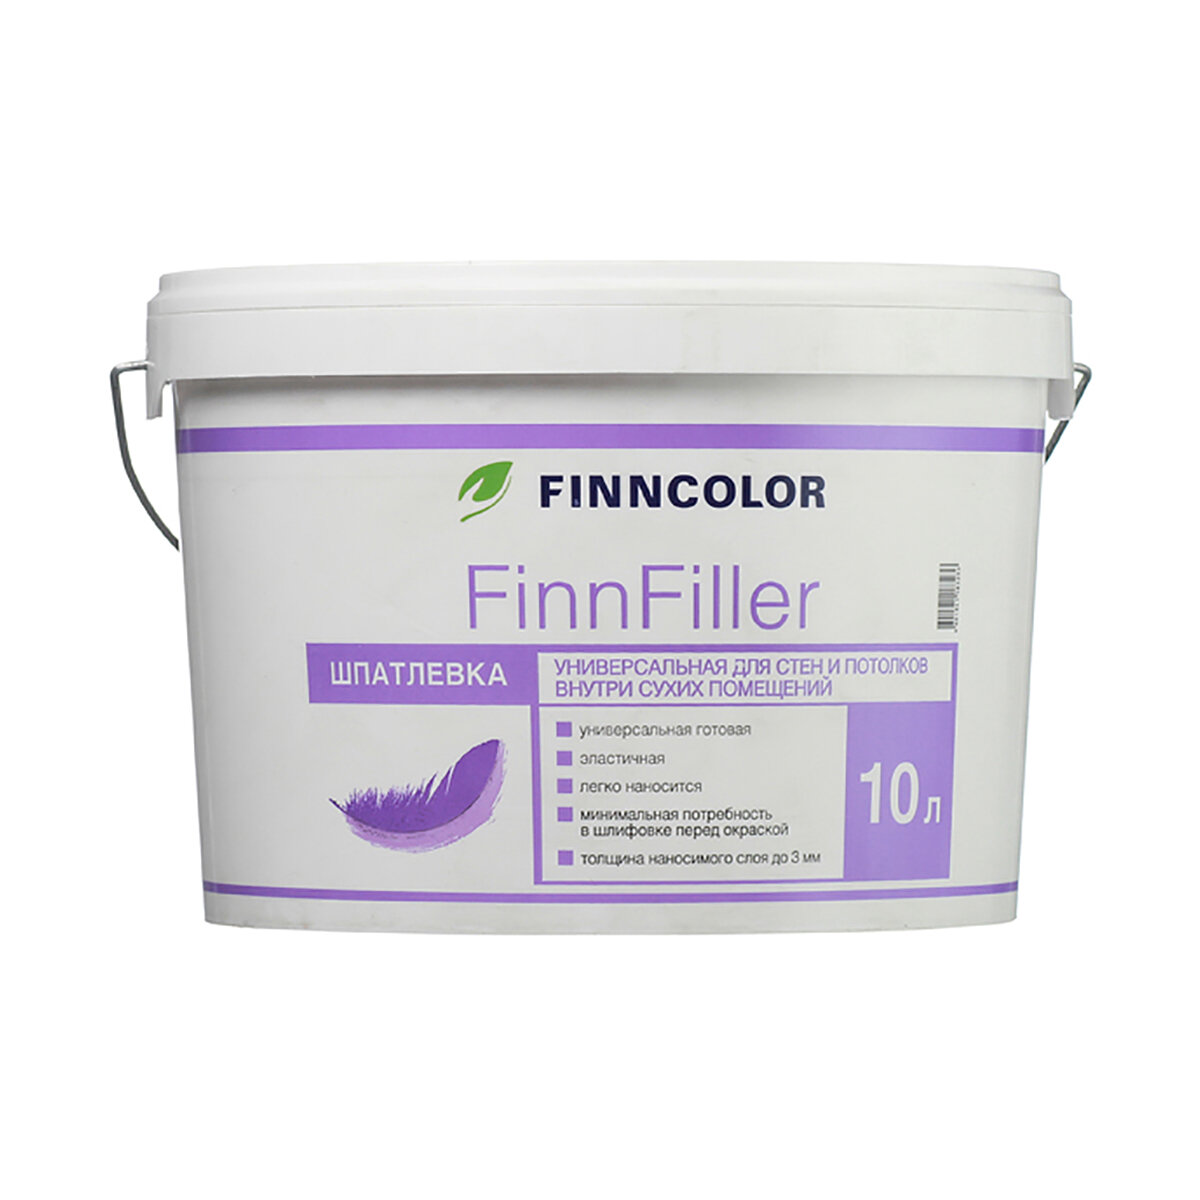   Finncolor FinnFiller, 10 , 